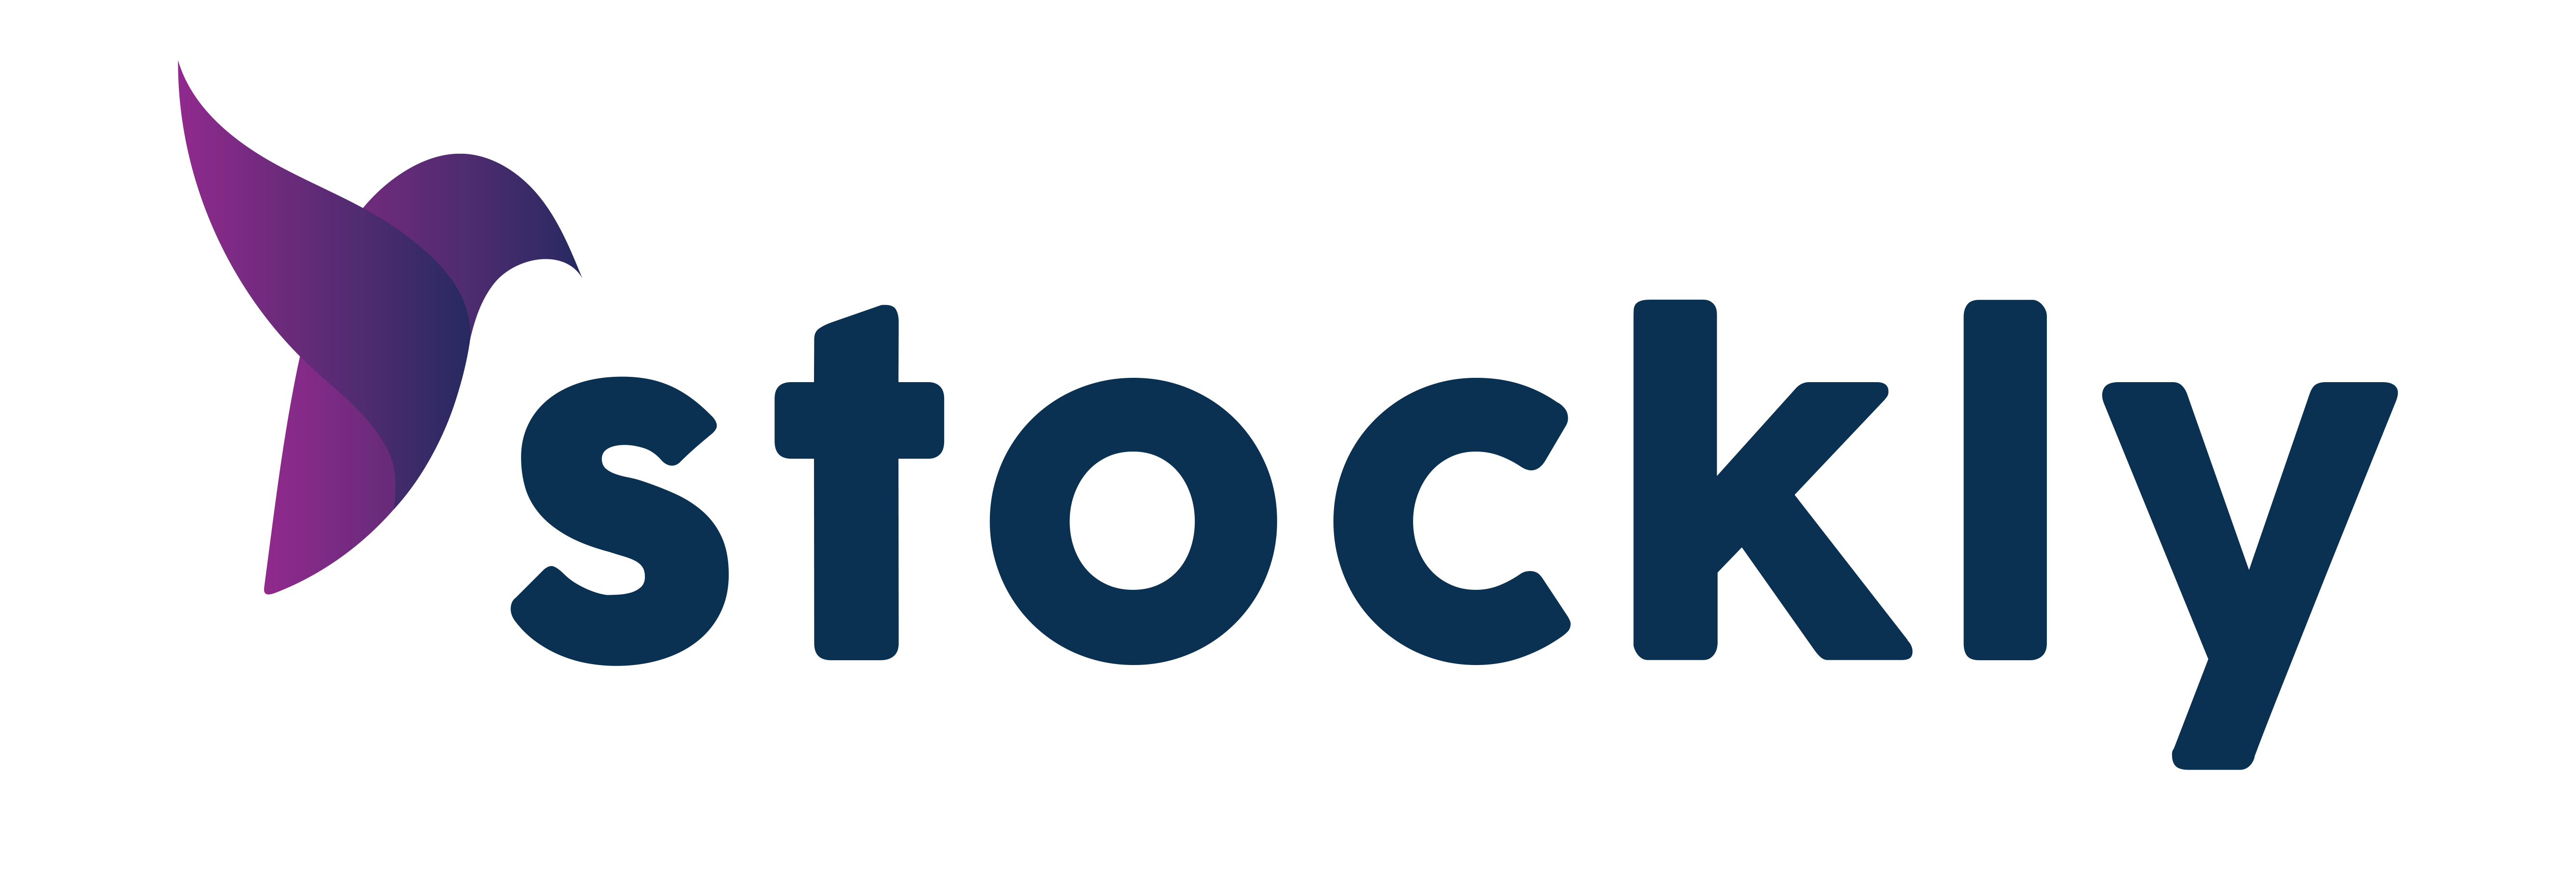 STOCKLY logo